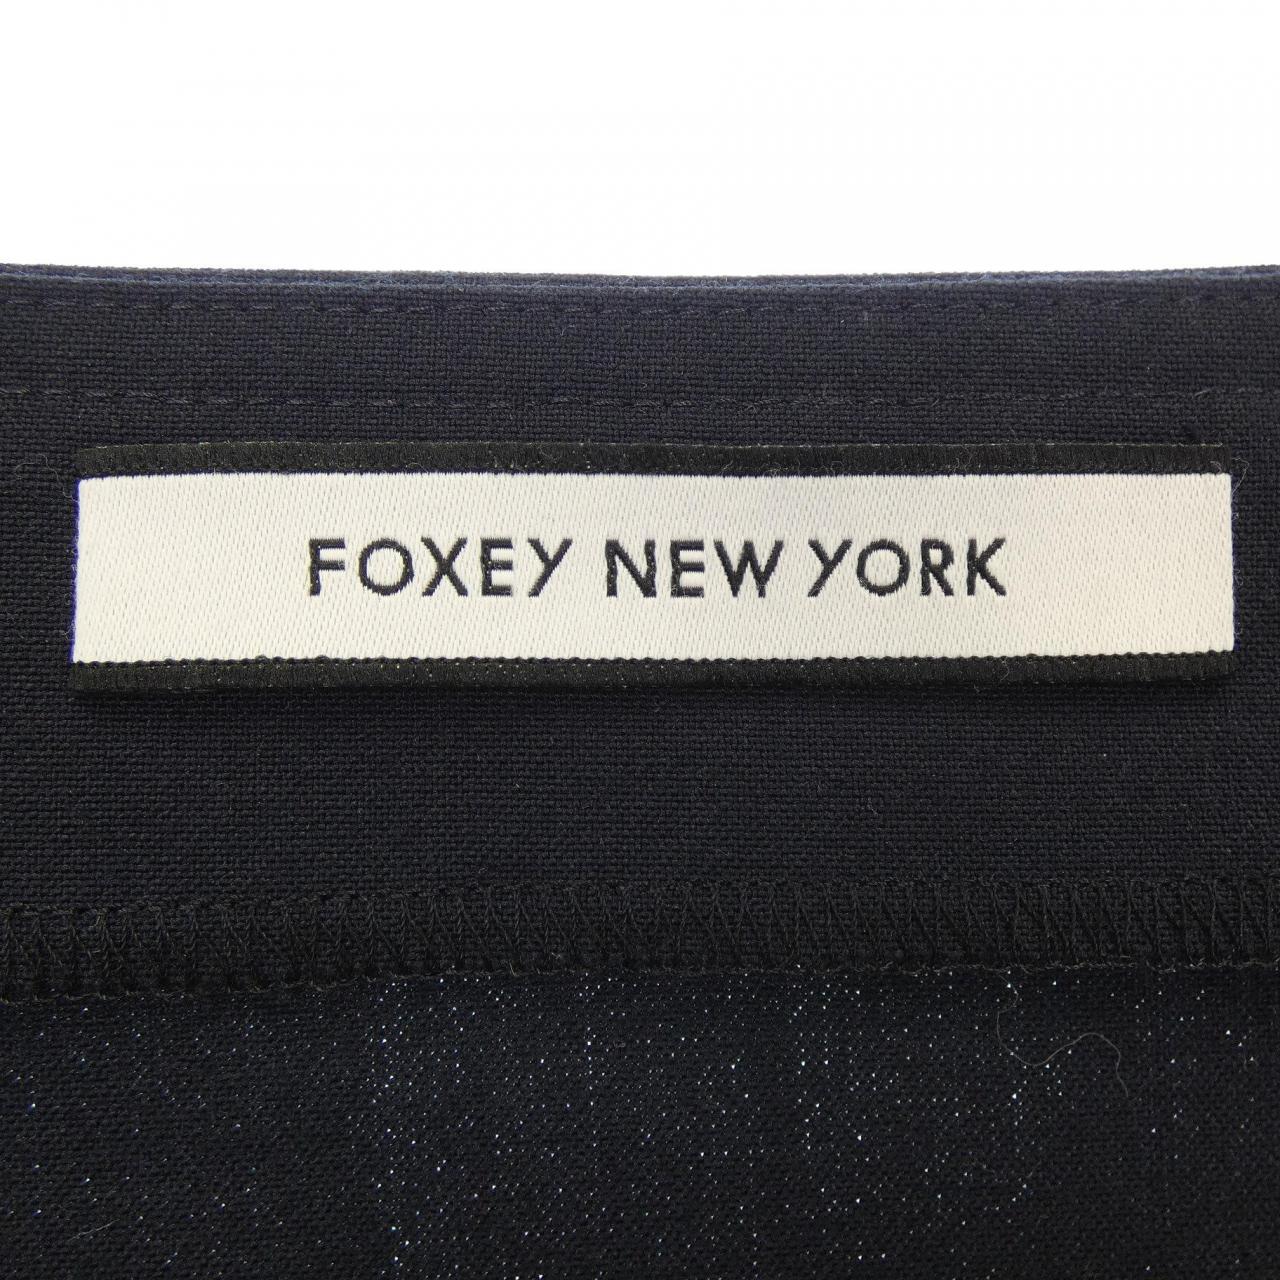 FOXEY NEW YORK FOXEY NEW YORK jacket